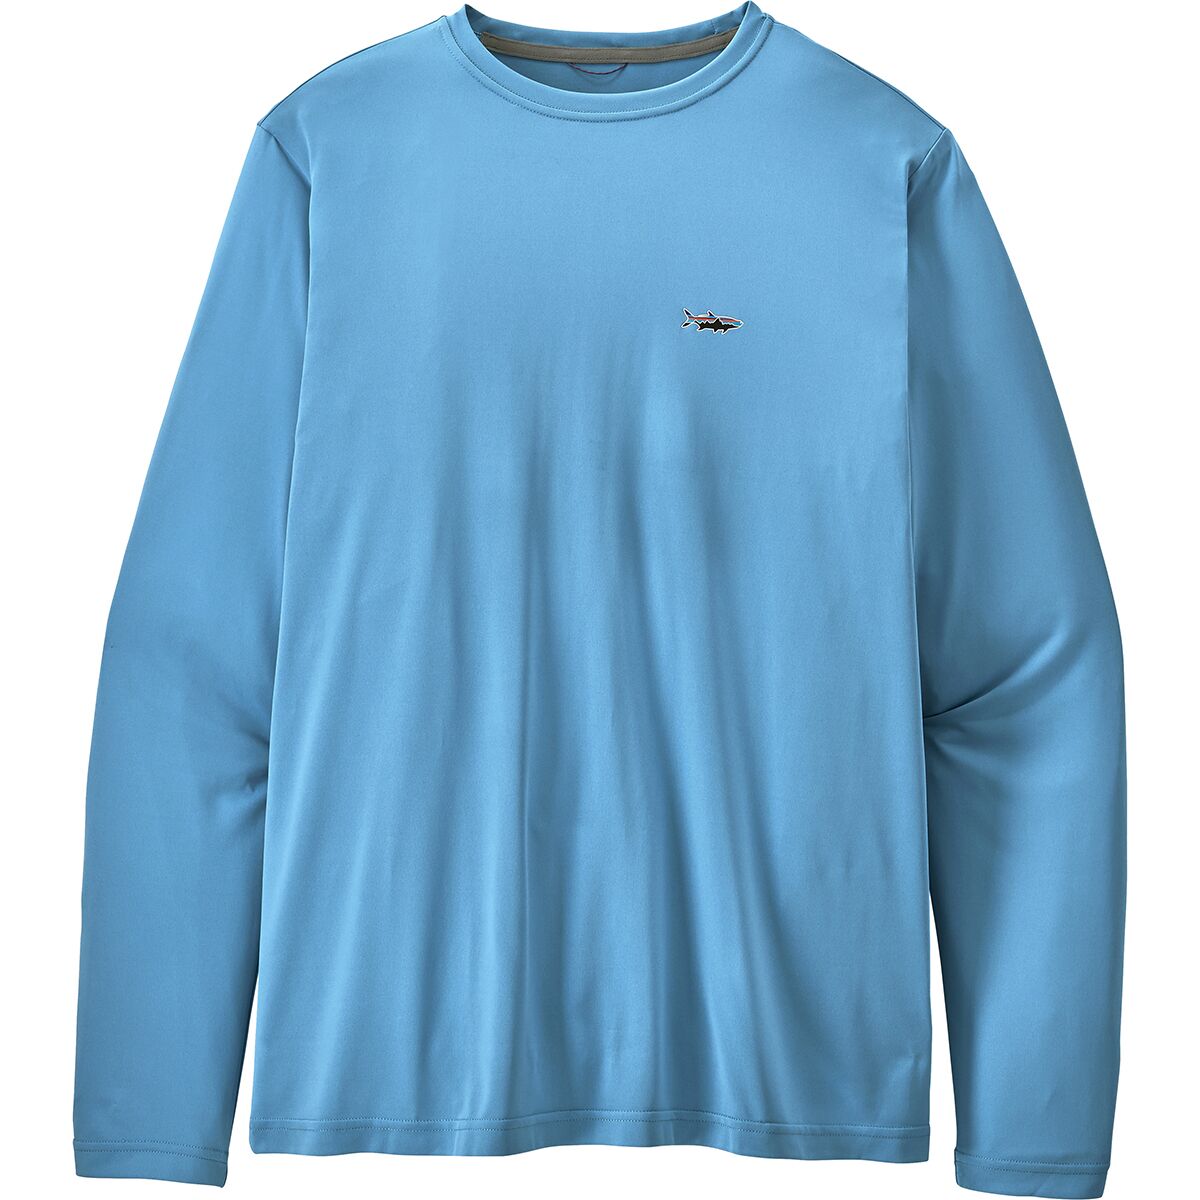 Patagonia Men's Long-Sleeved Capilene Cool Daily Fish Graphic Shirt - Fitz Roy Tarpon: Lago Blue